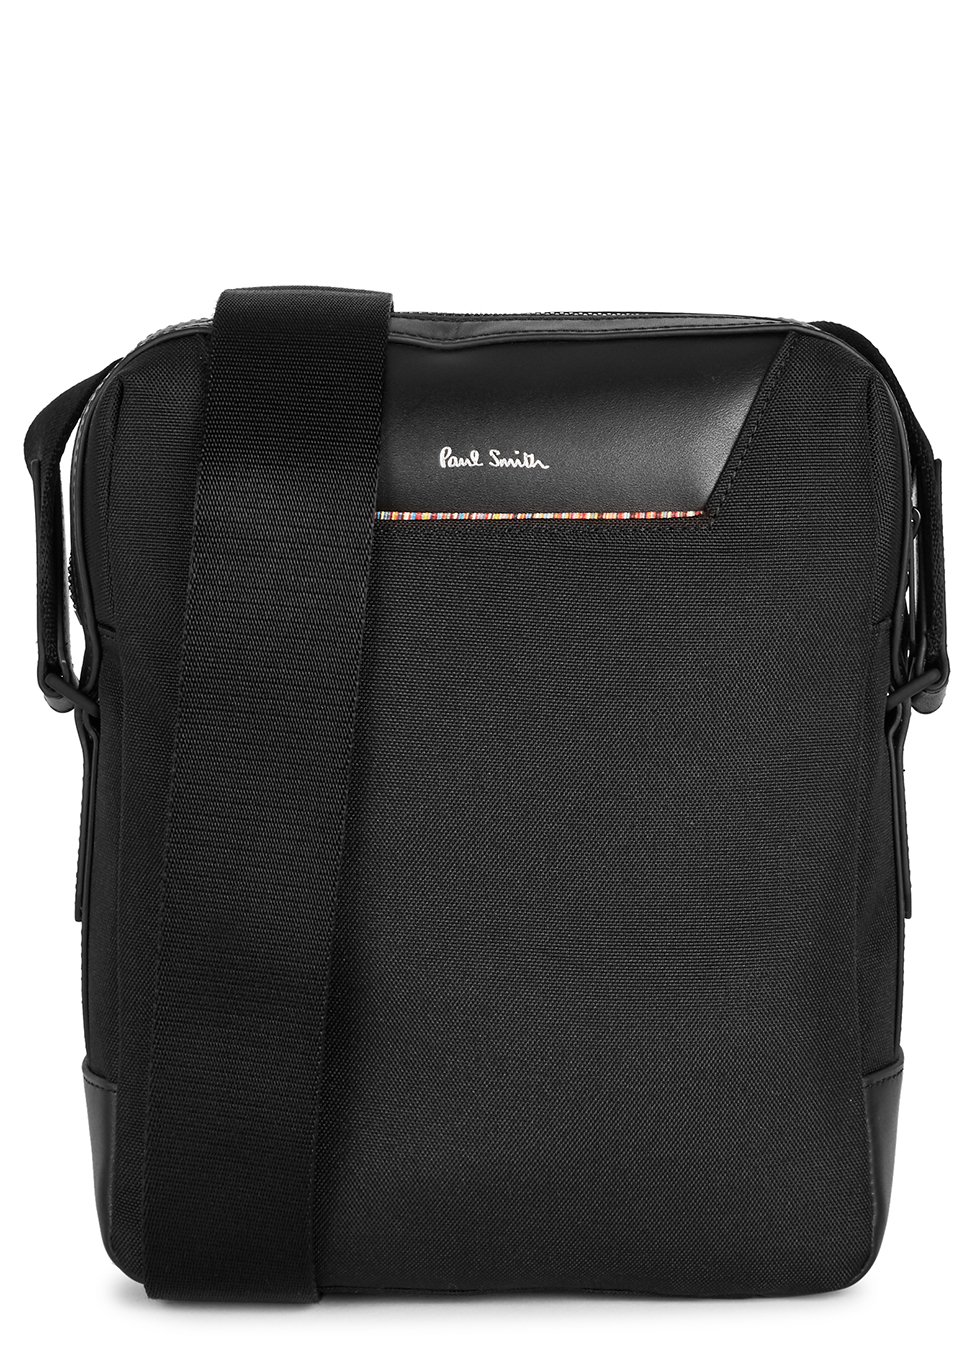 Black nylon cross-body bag